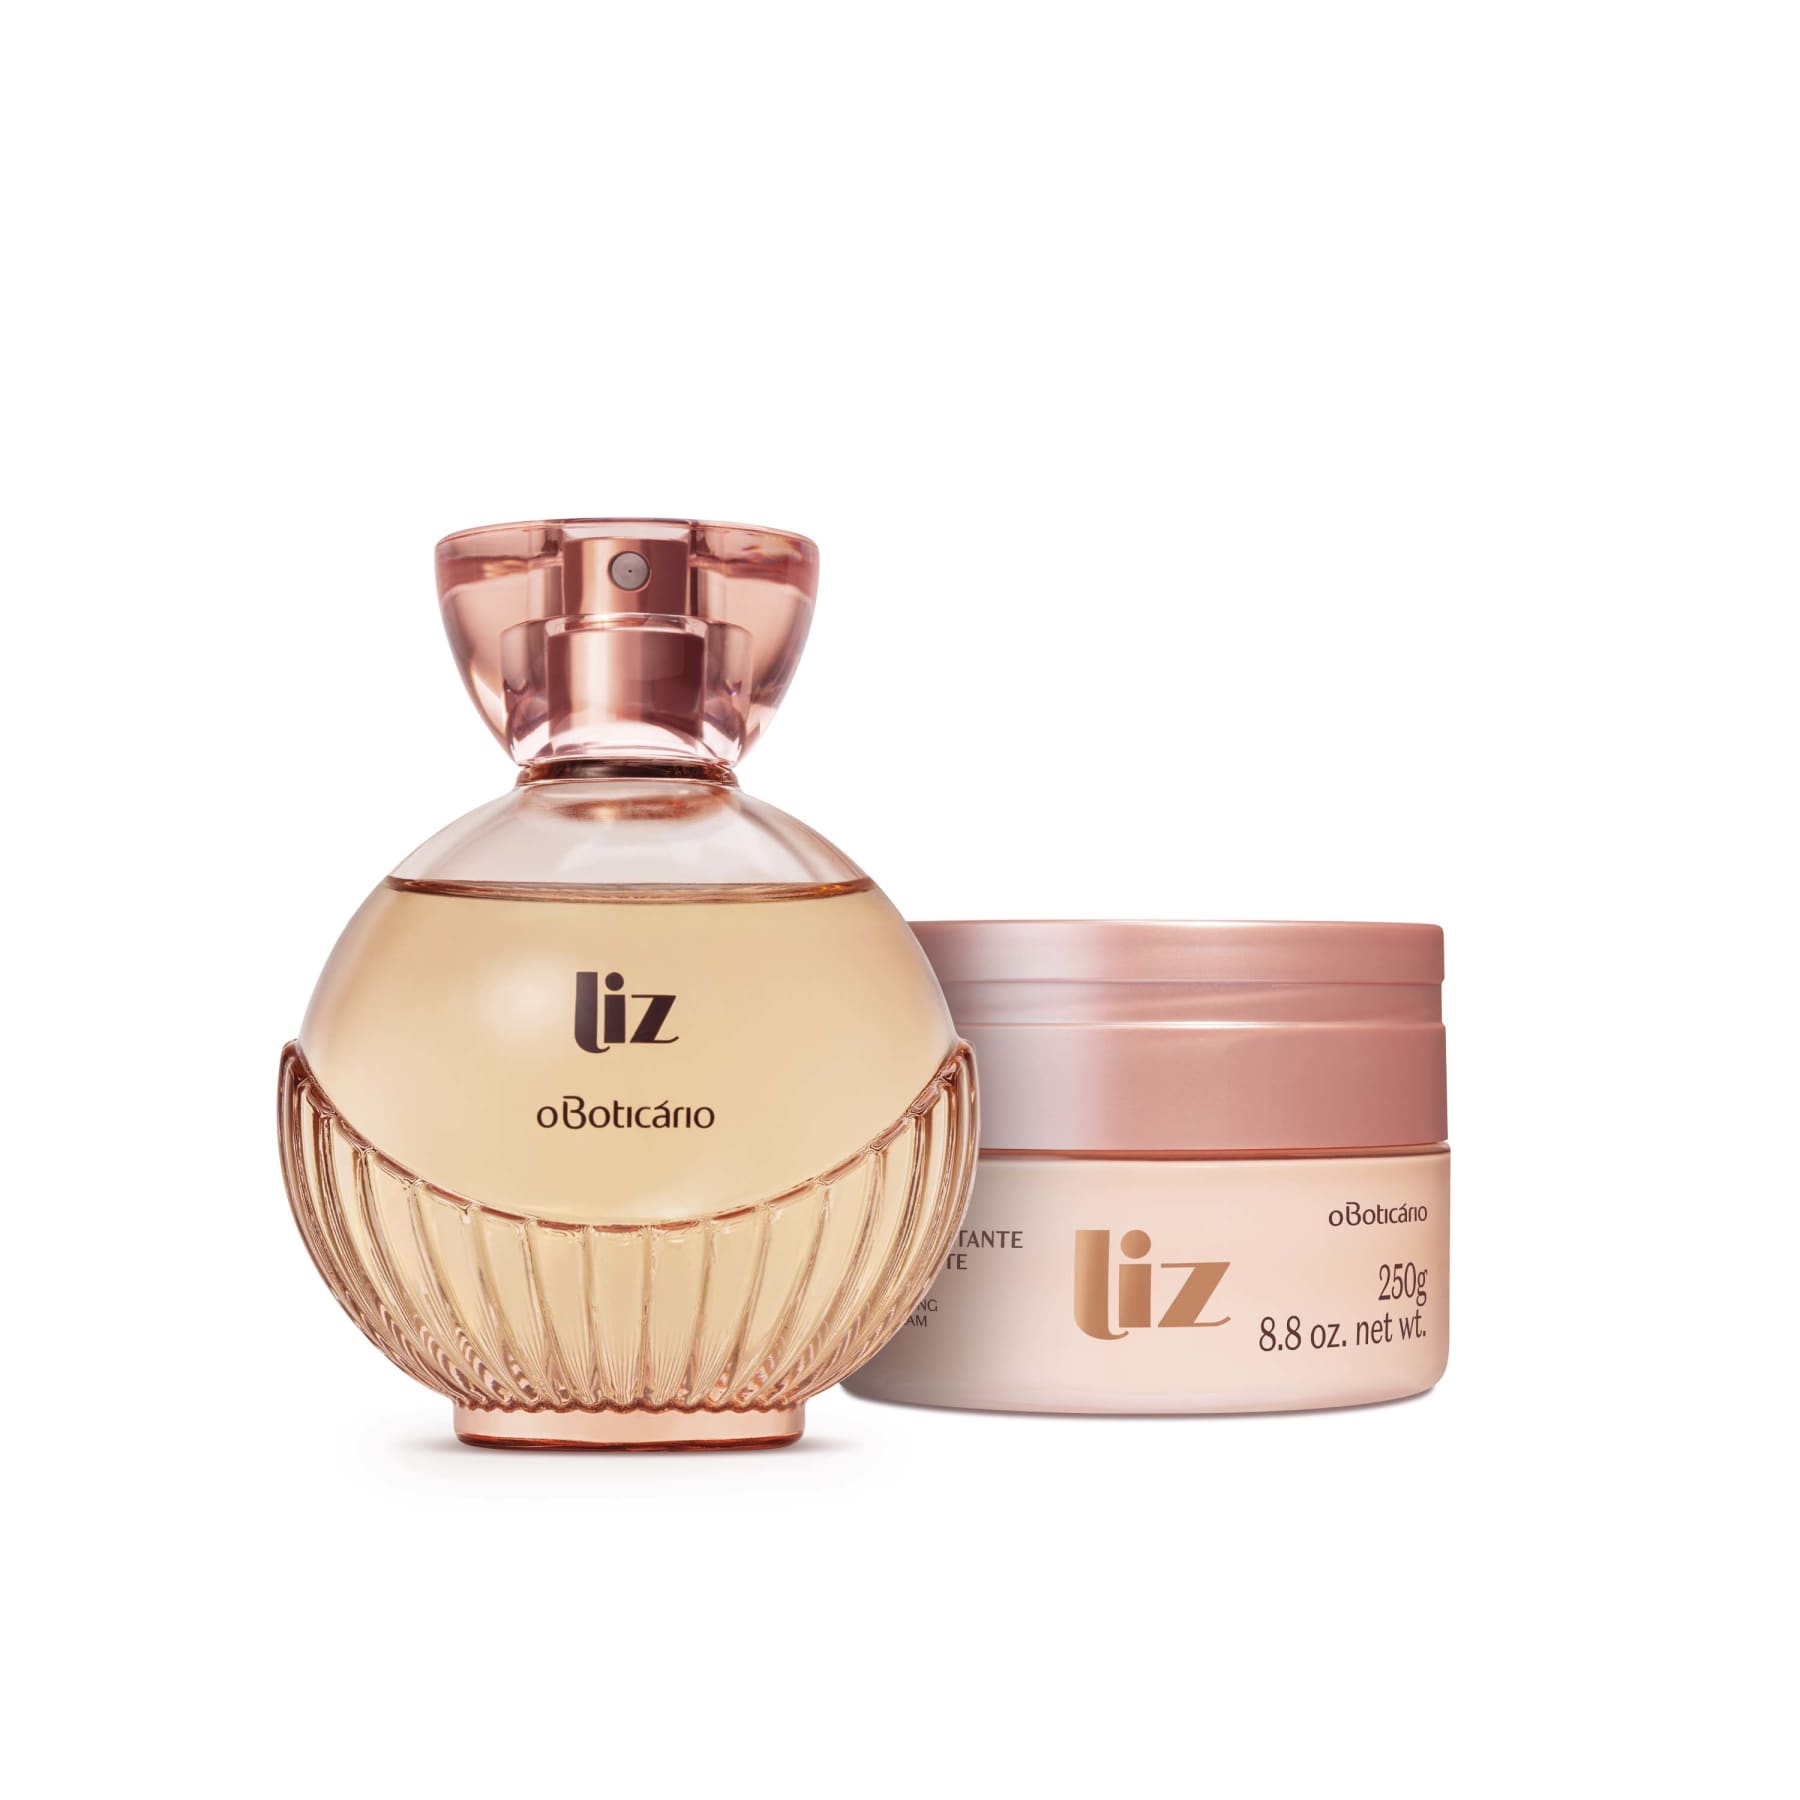 Kit Liz: Deodorant Cologne + Moisturizing Cream - o Boticario